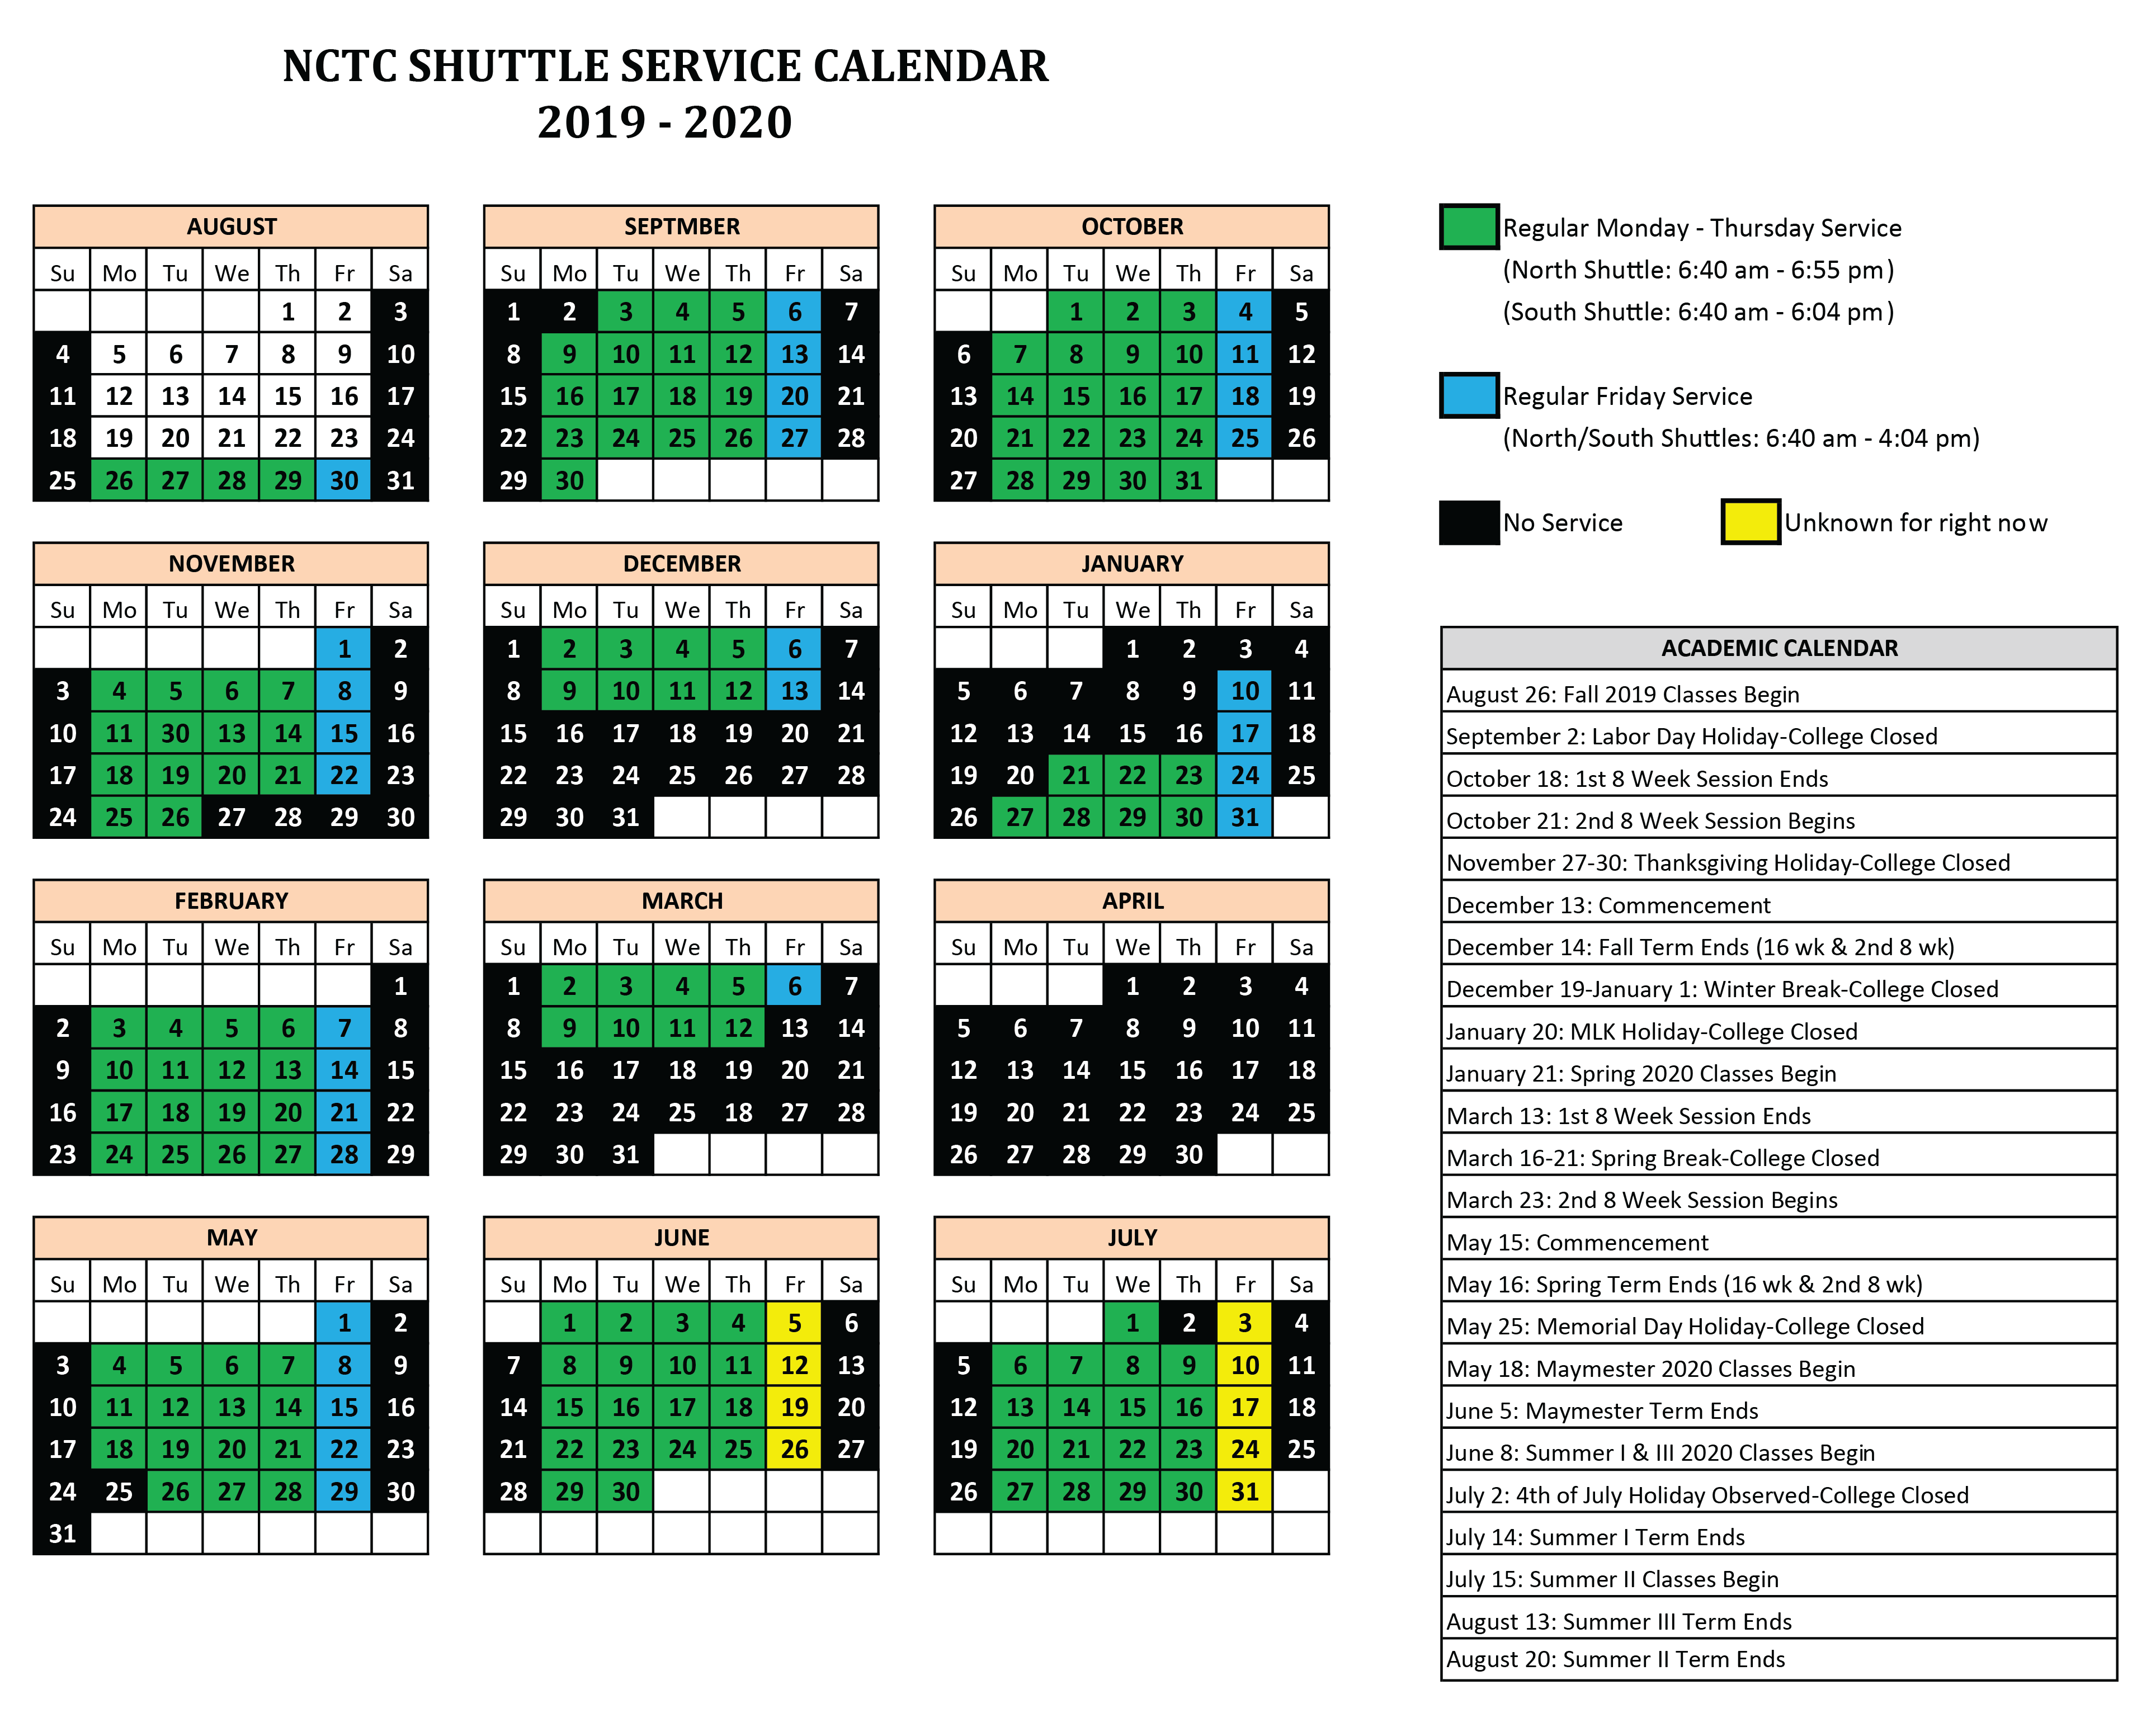 NCTC Service Calendar